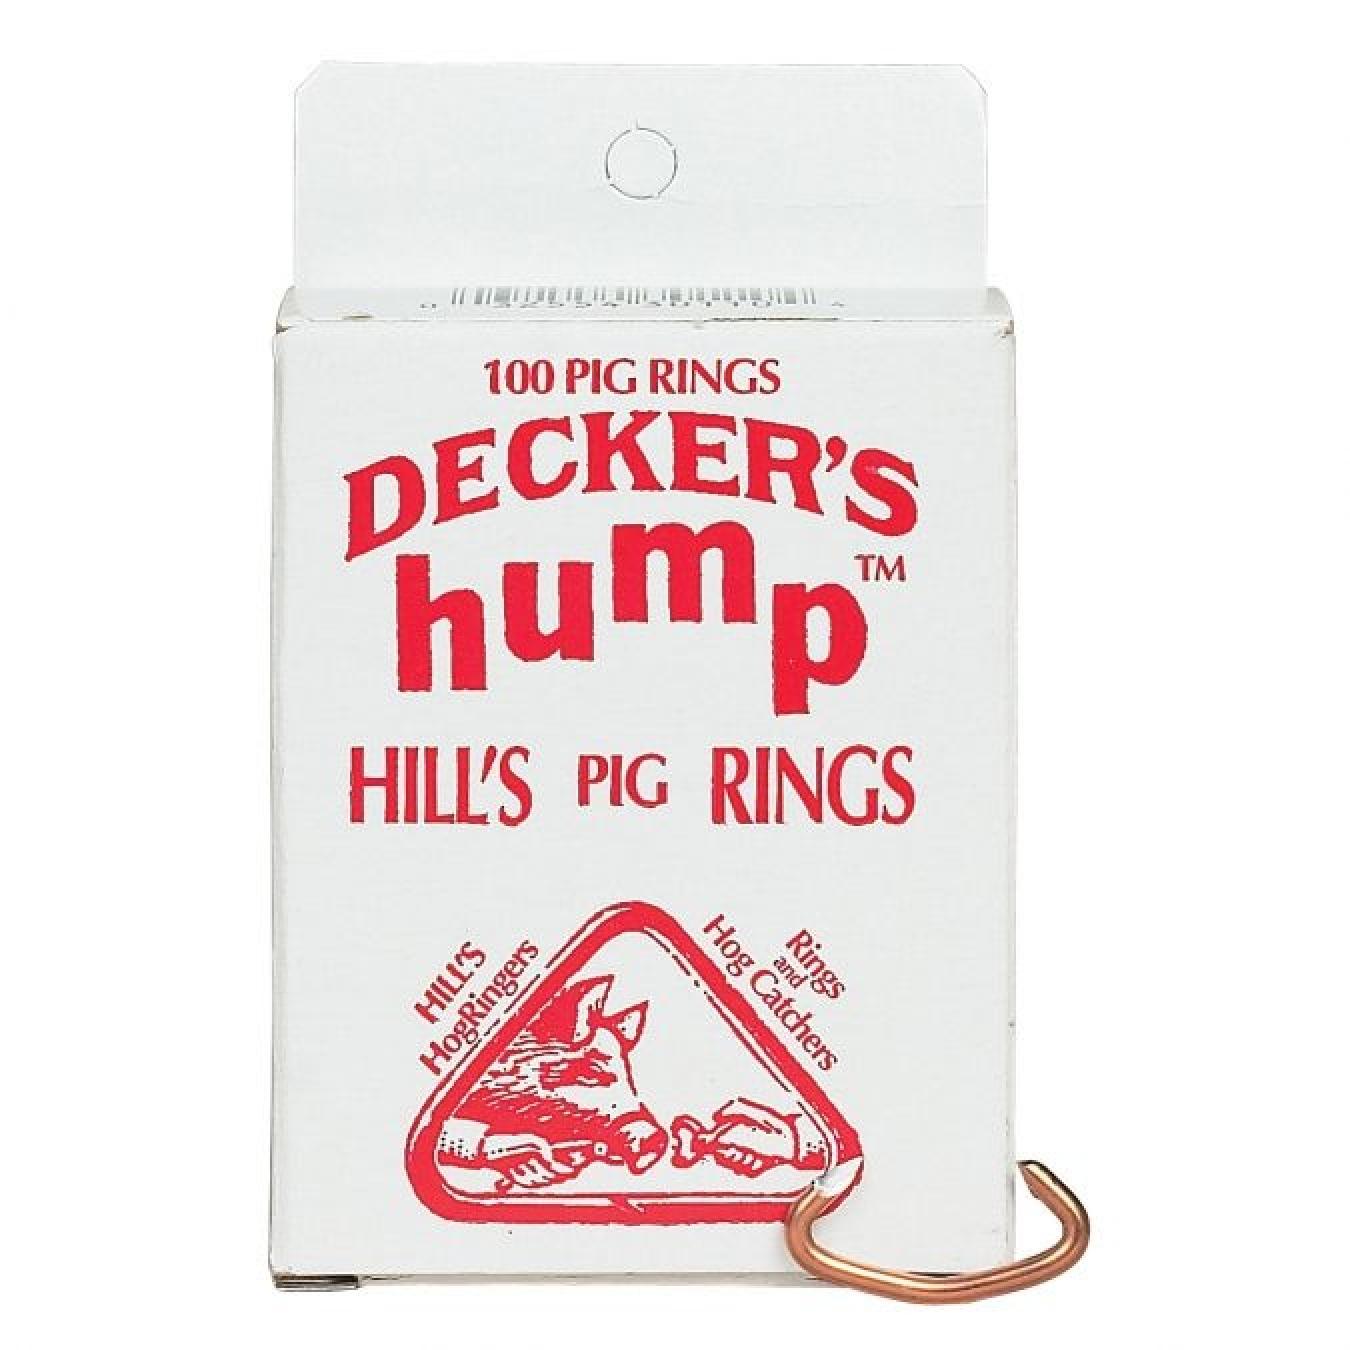 Decker's Hump™ Hill's #1 Pig Rings